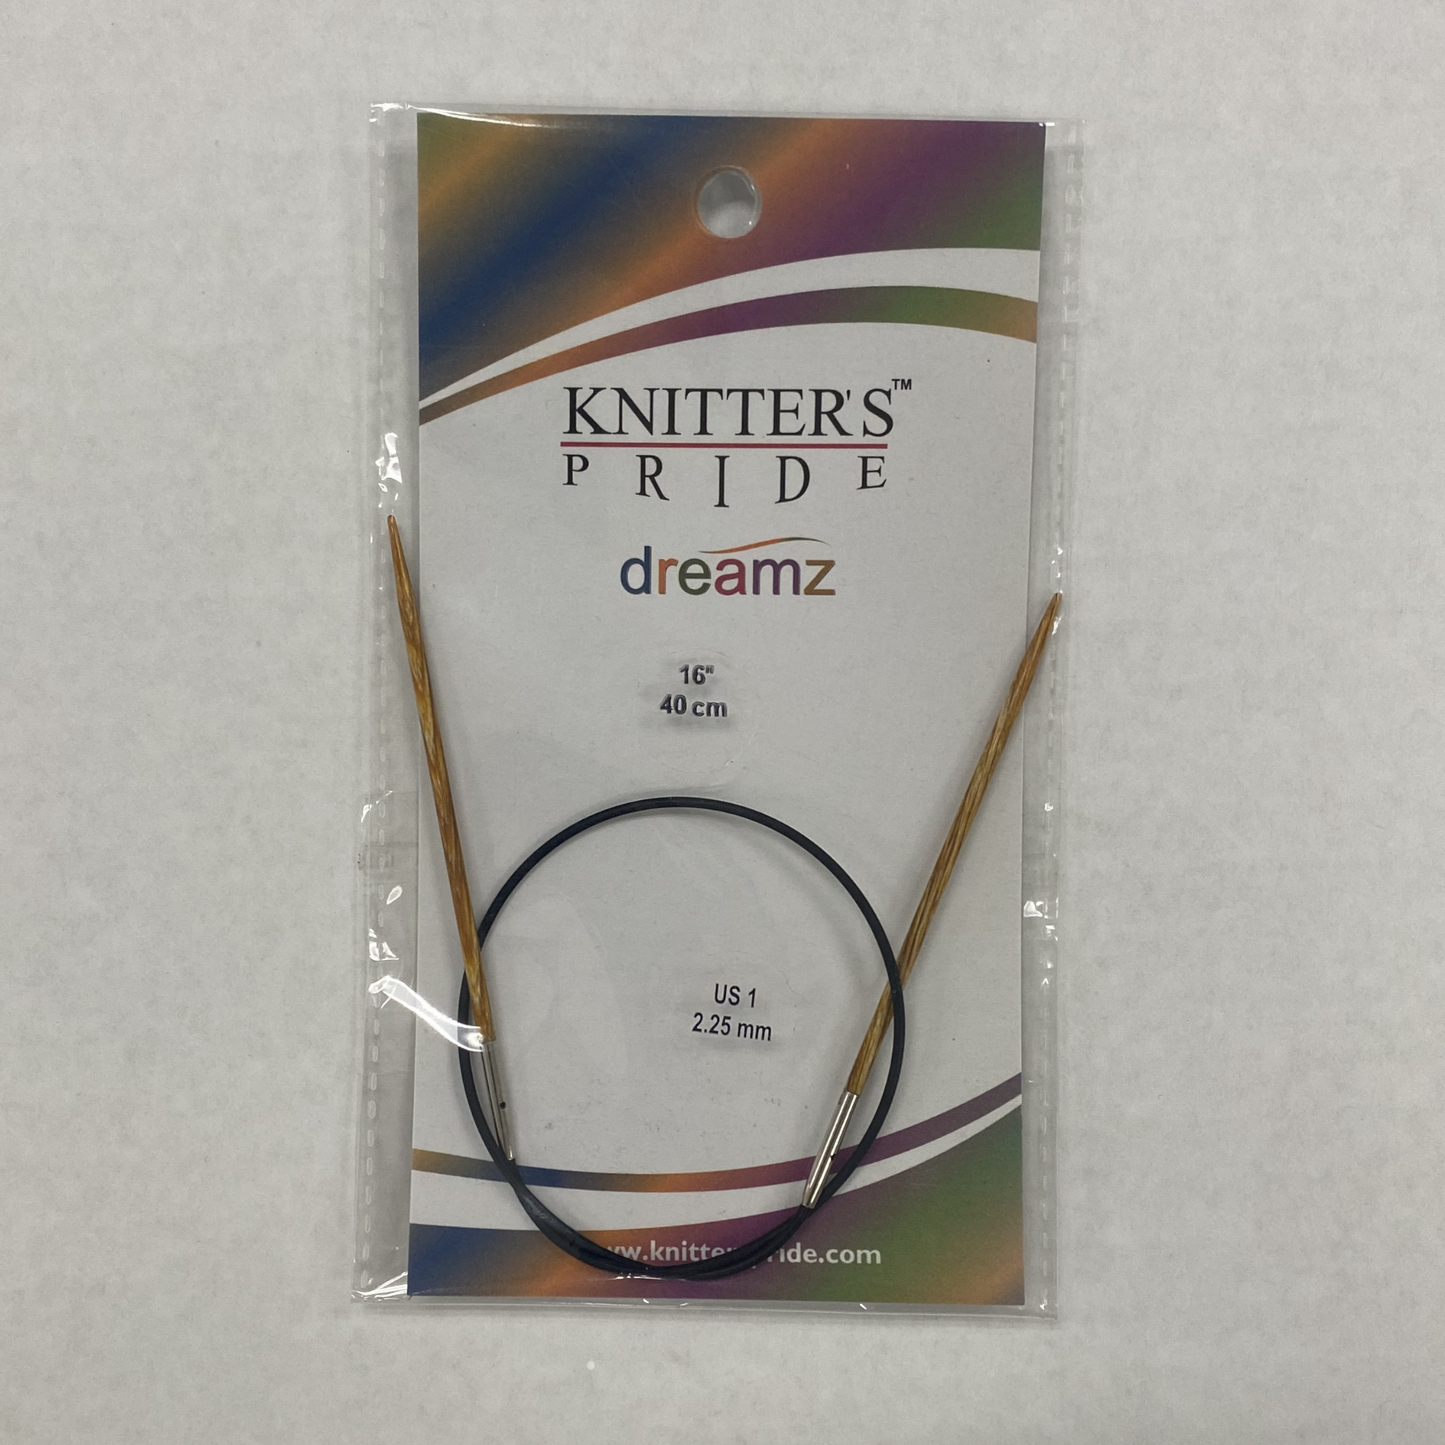 Knitter's Pride - Dreamz - US 1 / 2.25mm Fixed Circular Needles